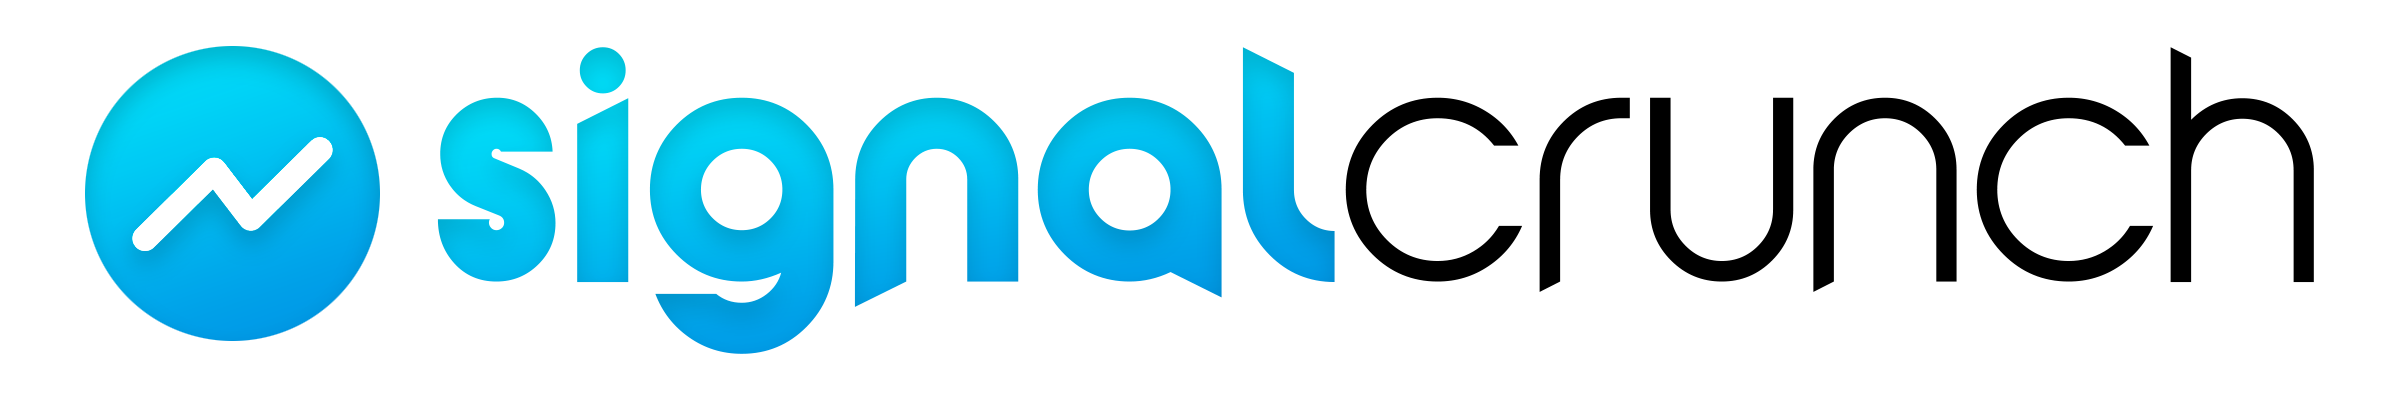 signalCrunch Logo